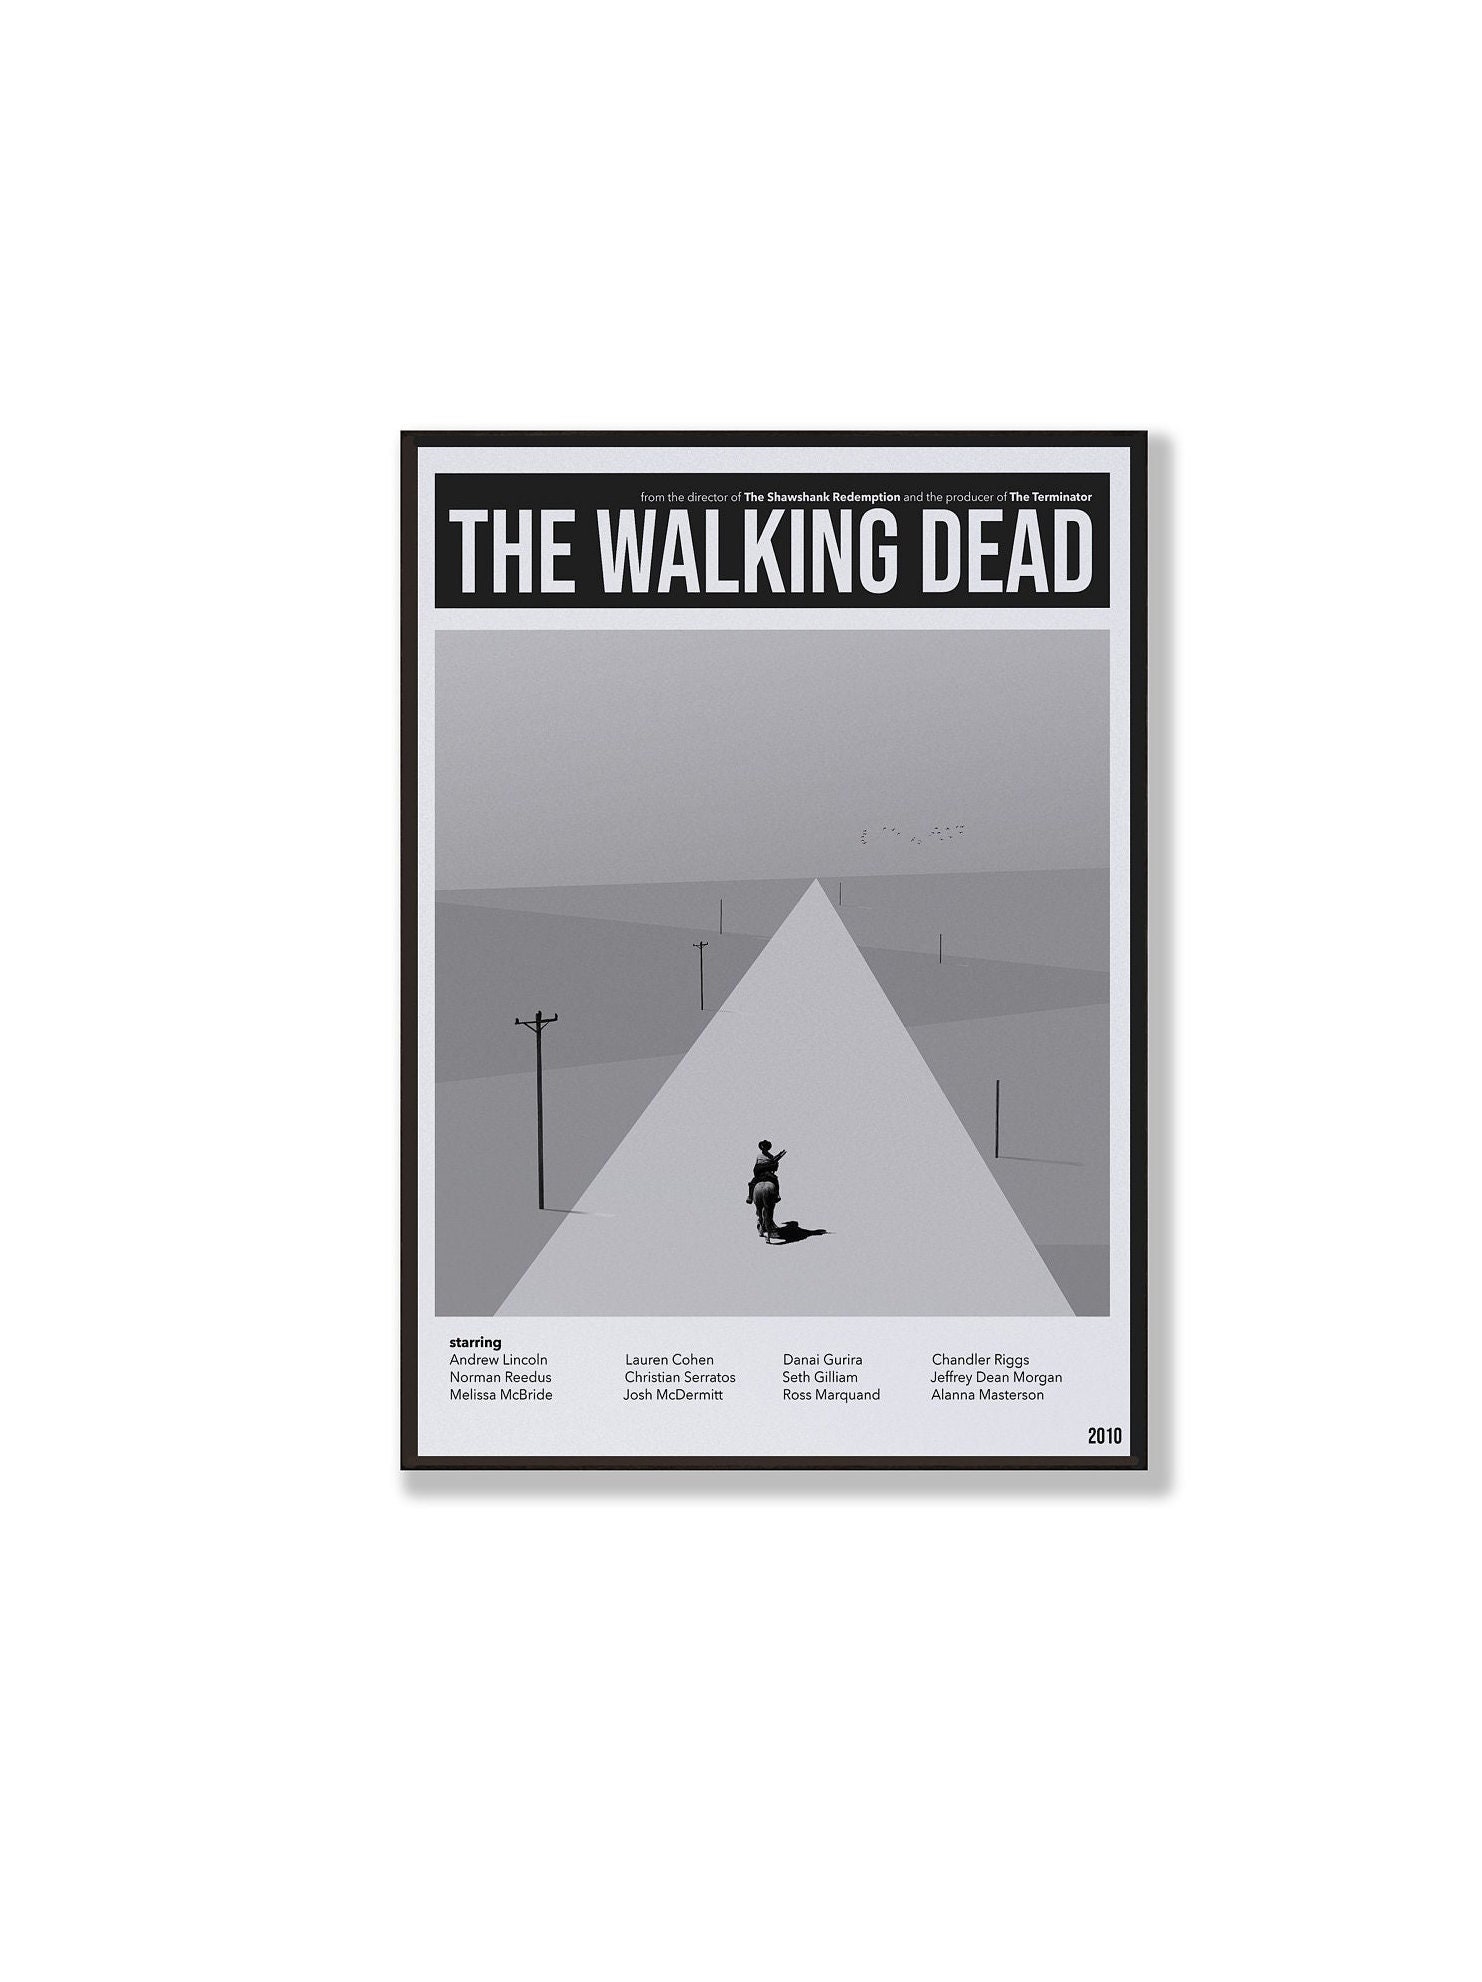 THE WALKING DEAD (Season 1) UK Import Poster - Shop dopetw Posters